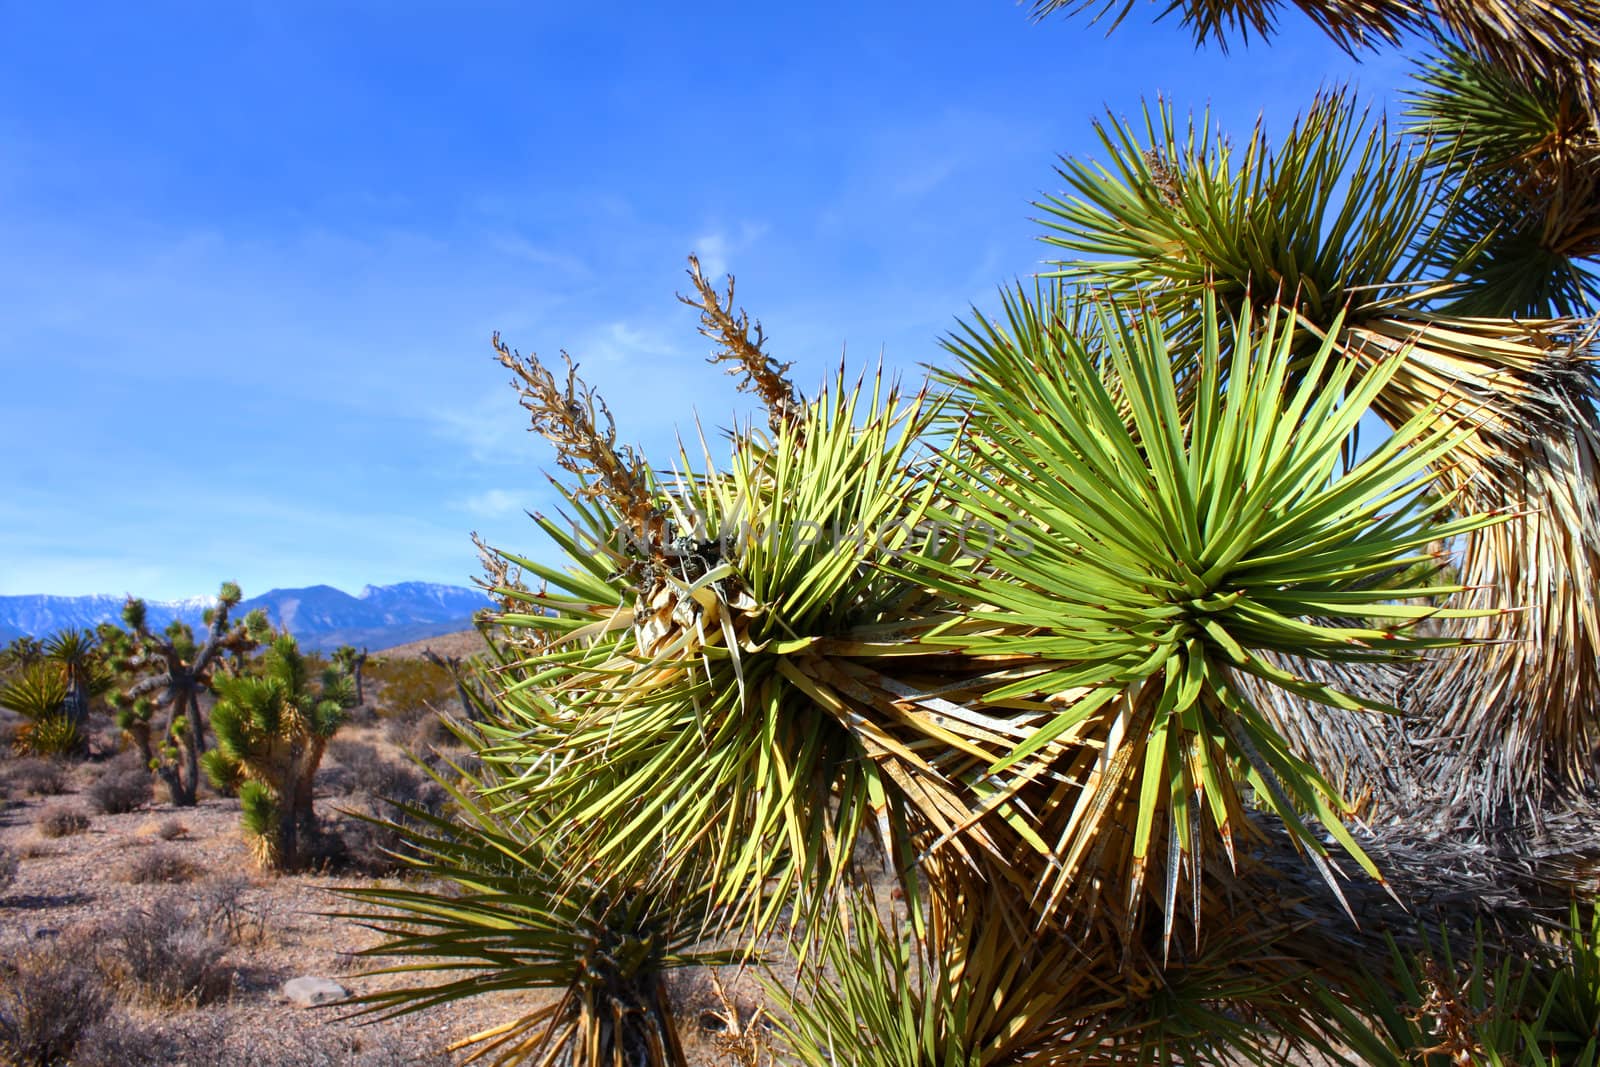 Joshua Tree (Yucca brevifolia) in the desert ecosystem northwest of Las Vegas.